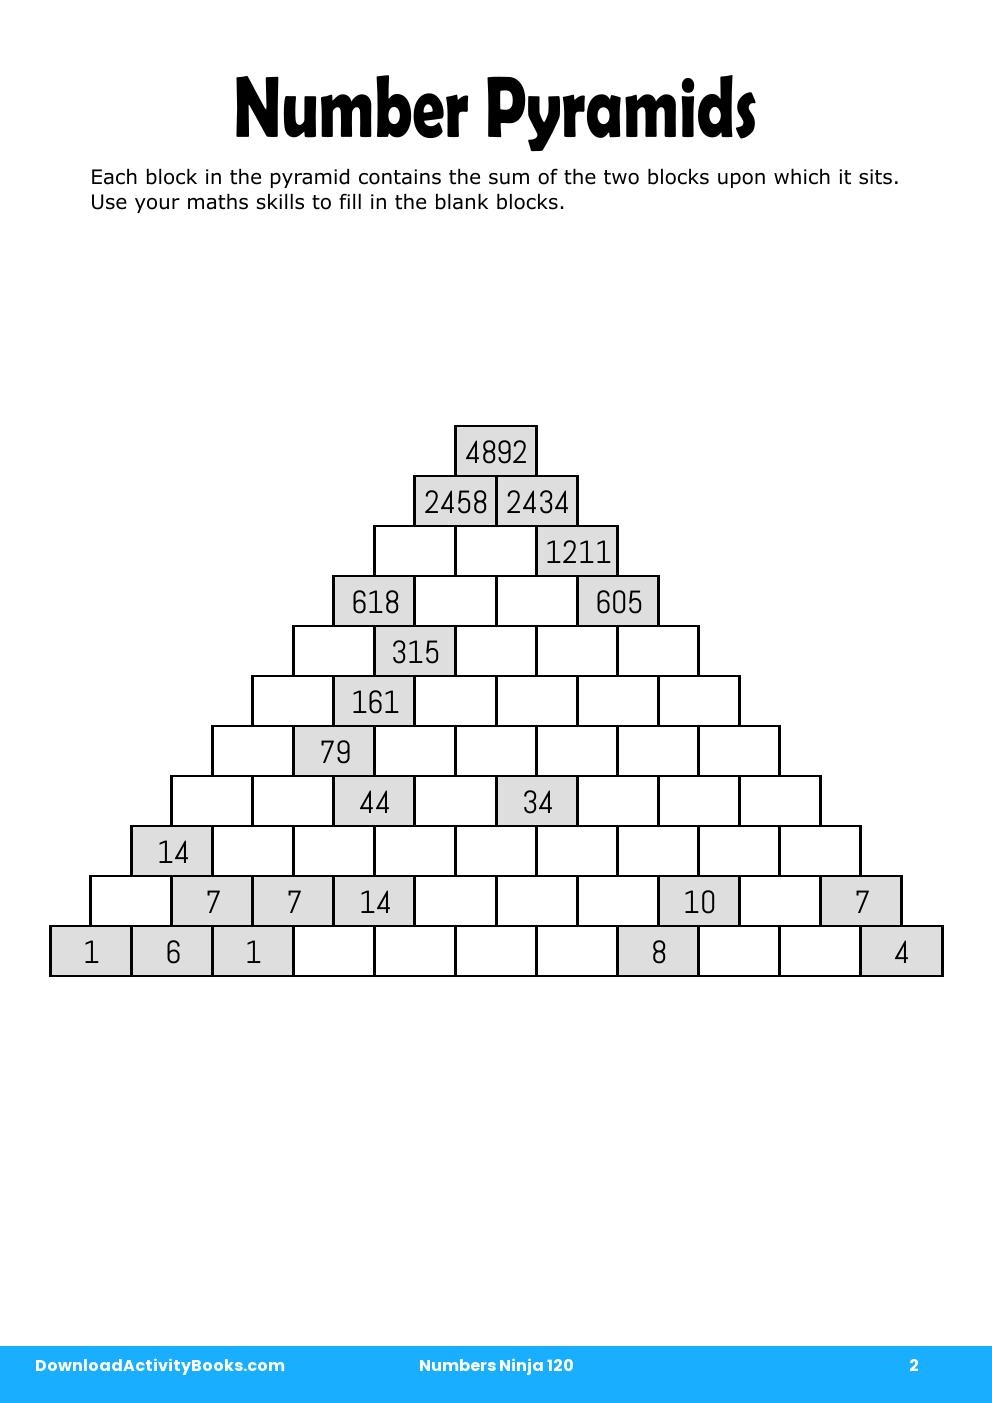 Number Pyramids in Numbers Ninja 120